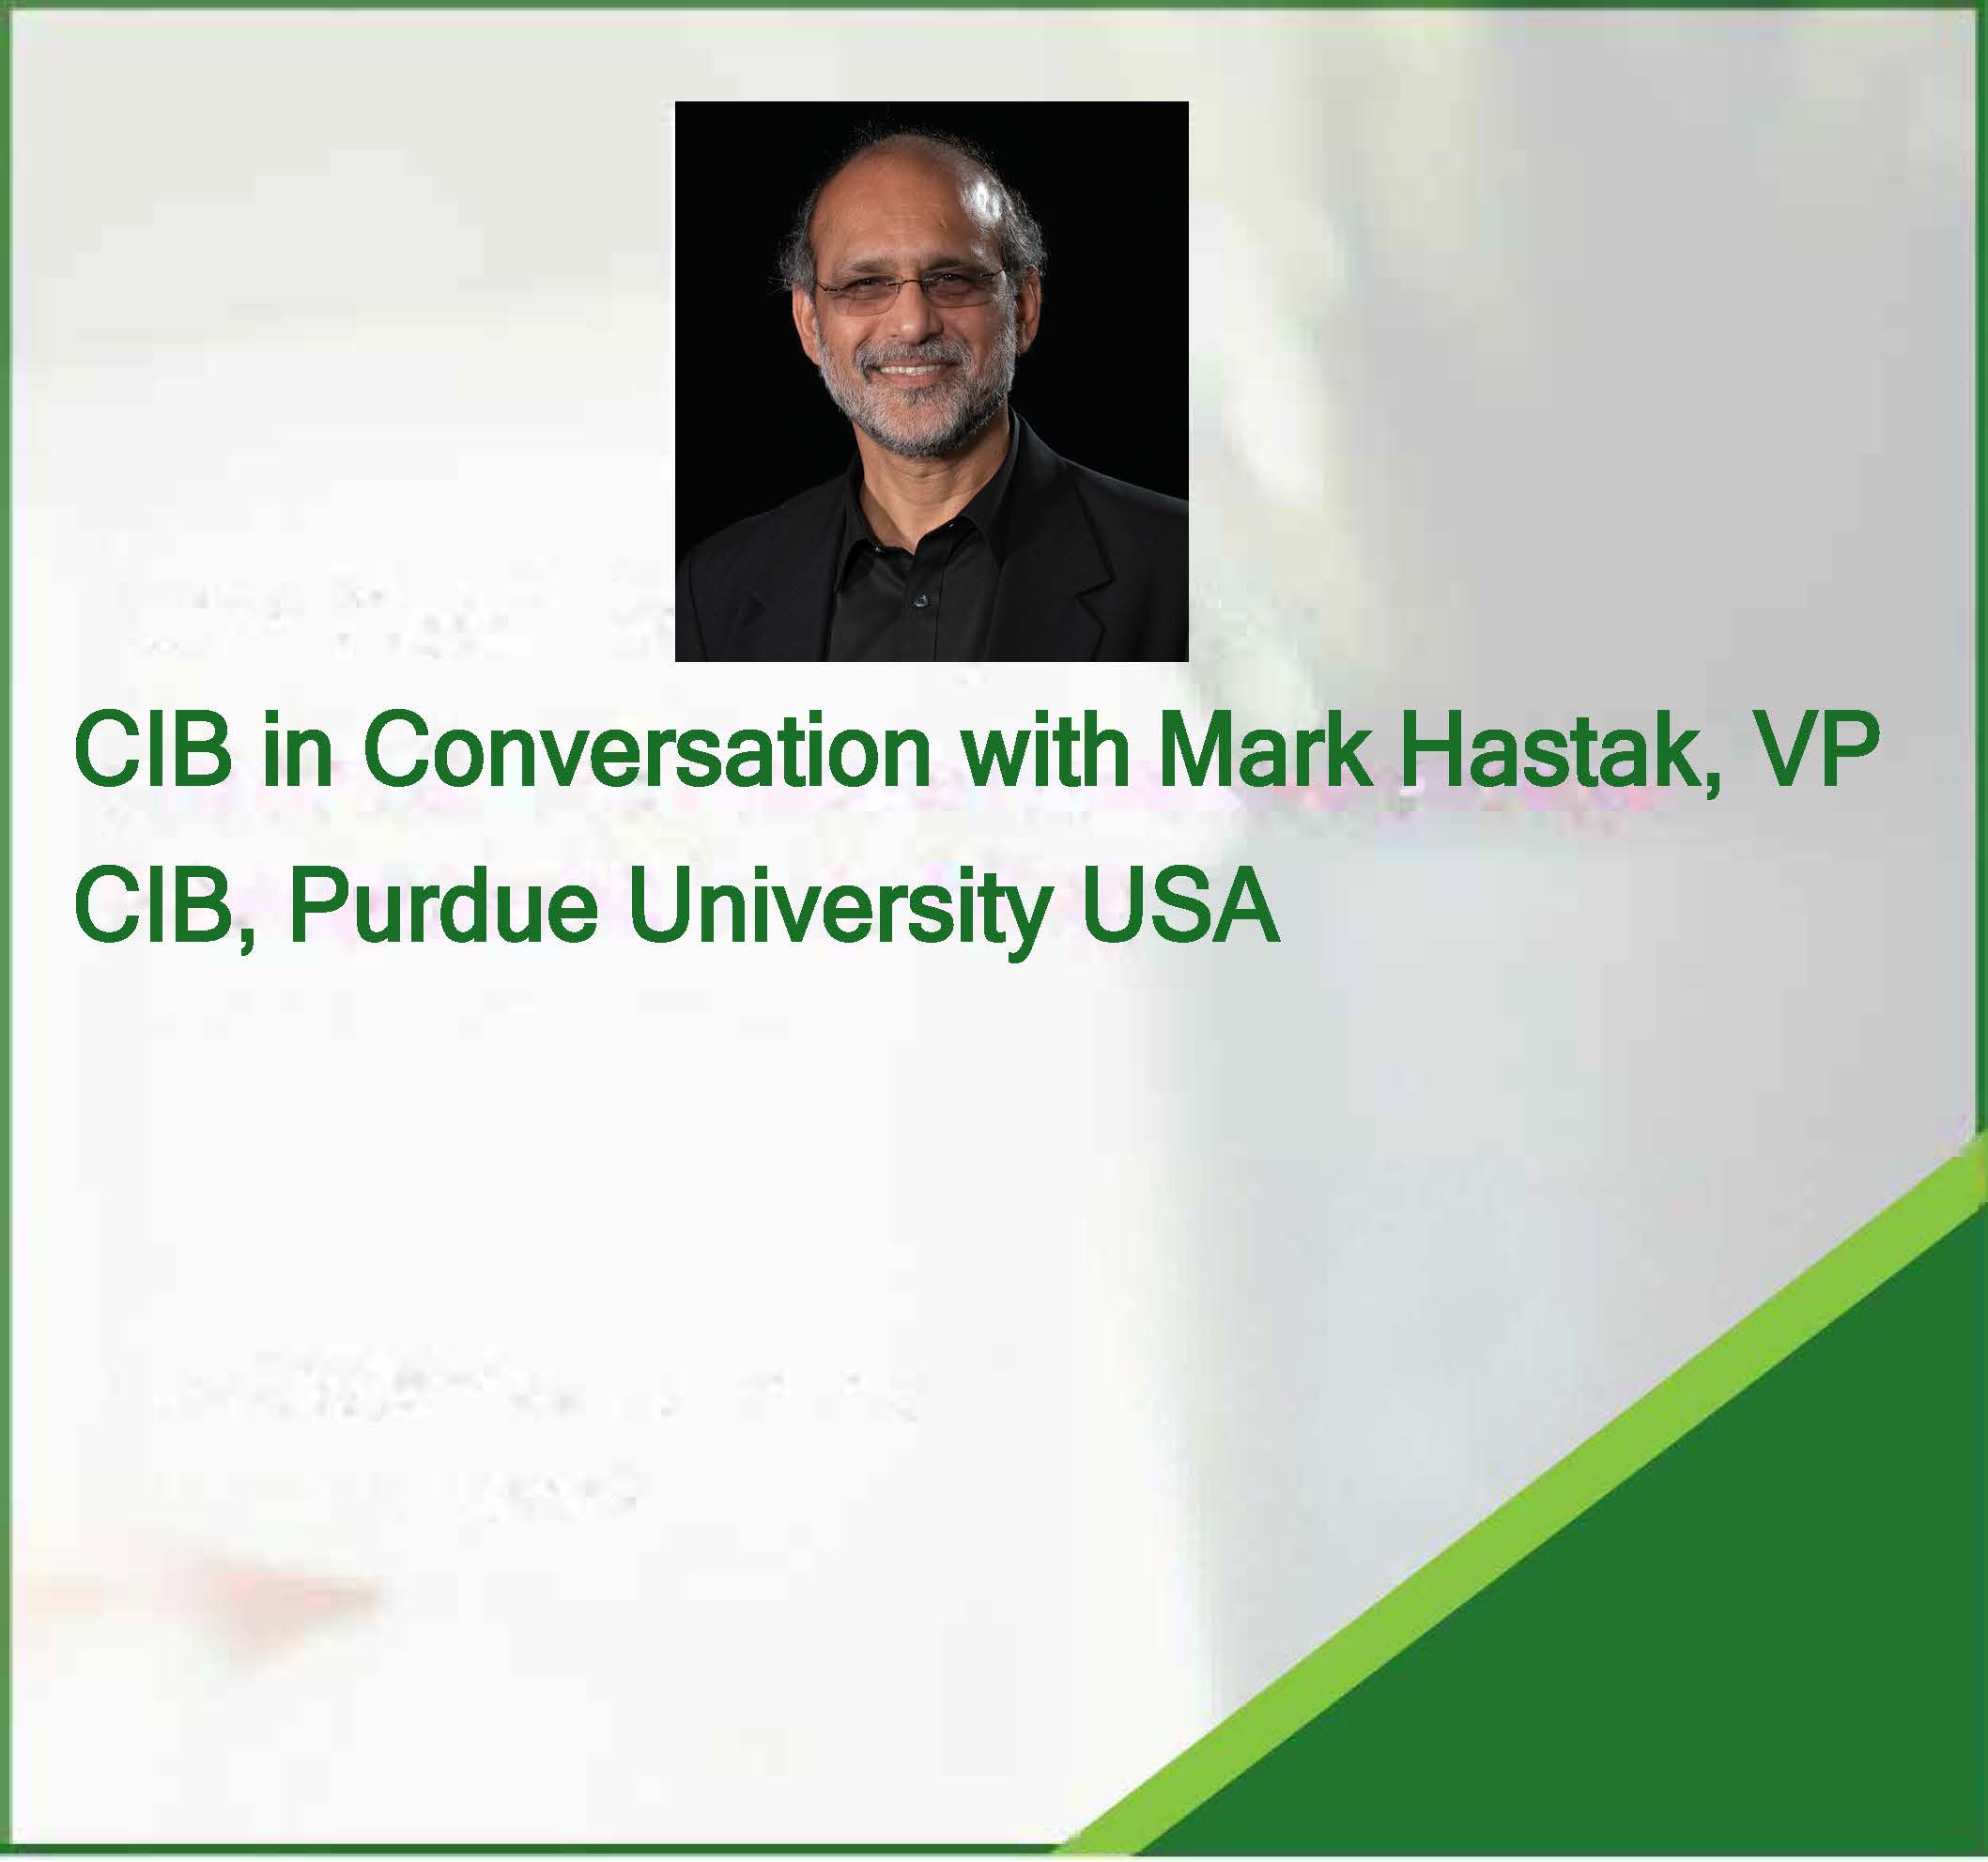 CIB in Conversation with Mark Hastak, Vice President CIB – Purdue University USA